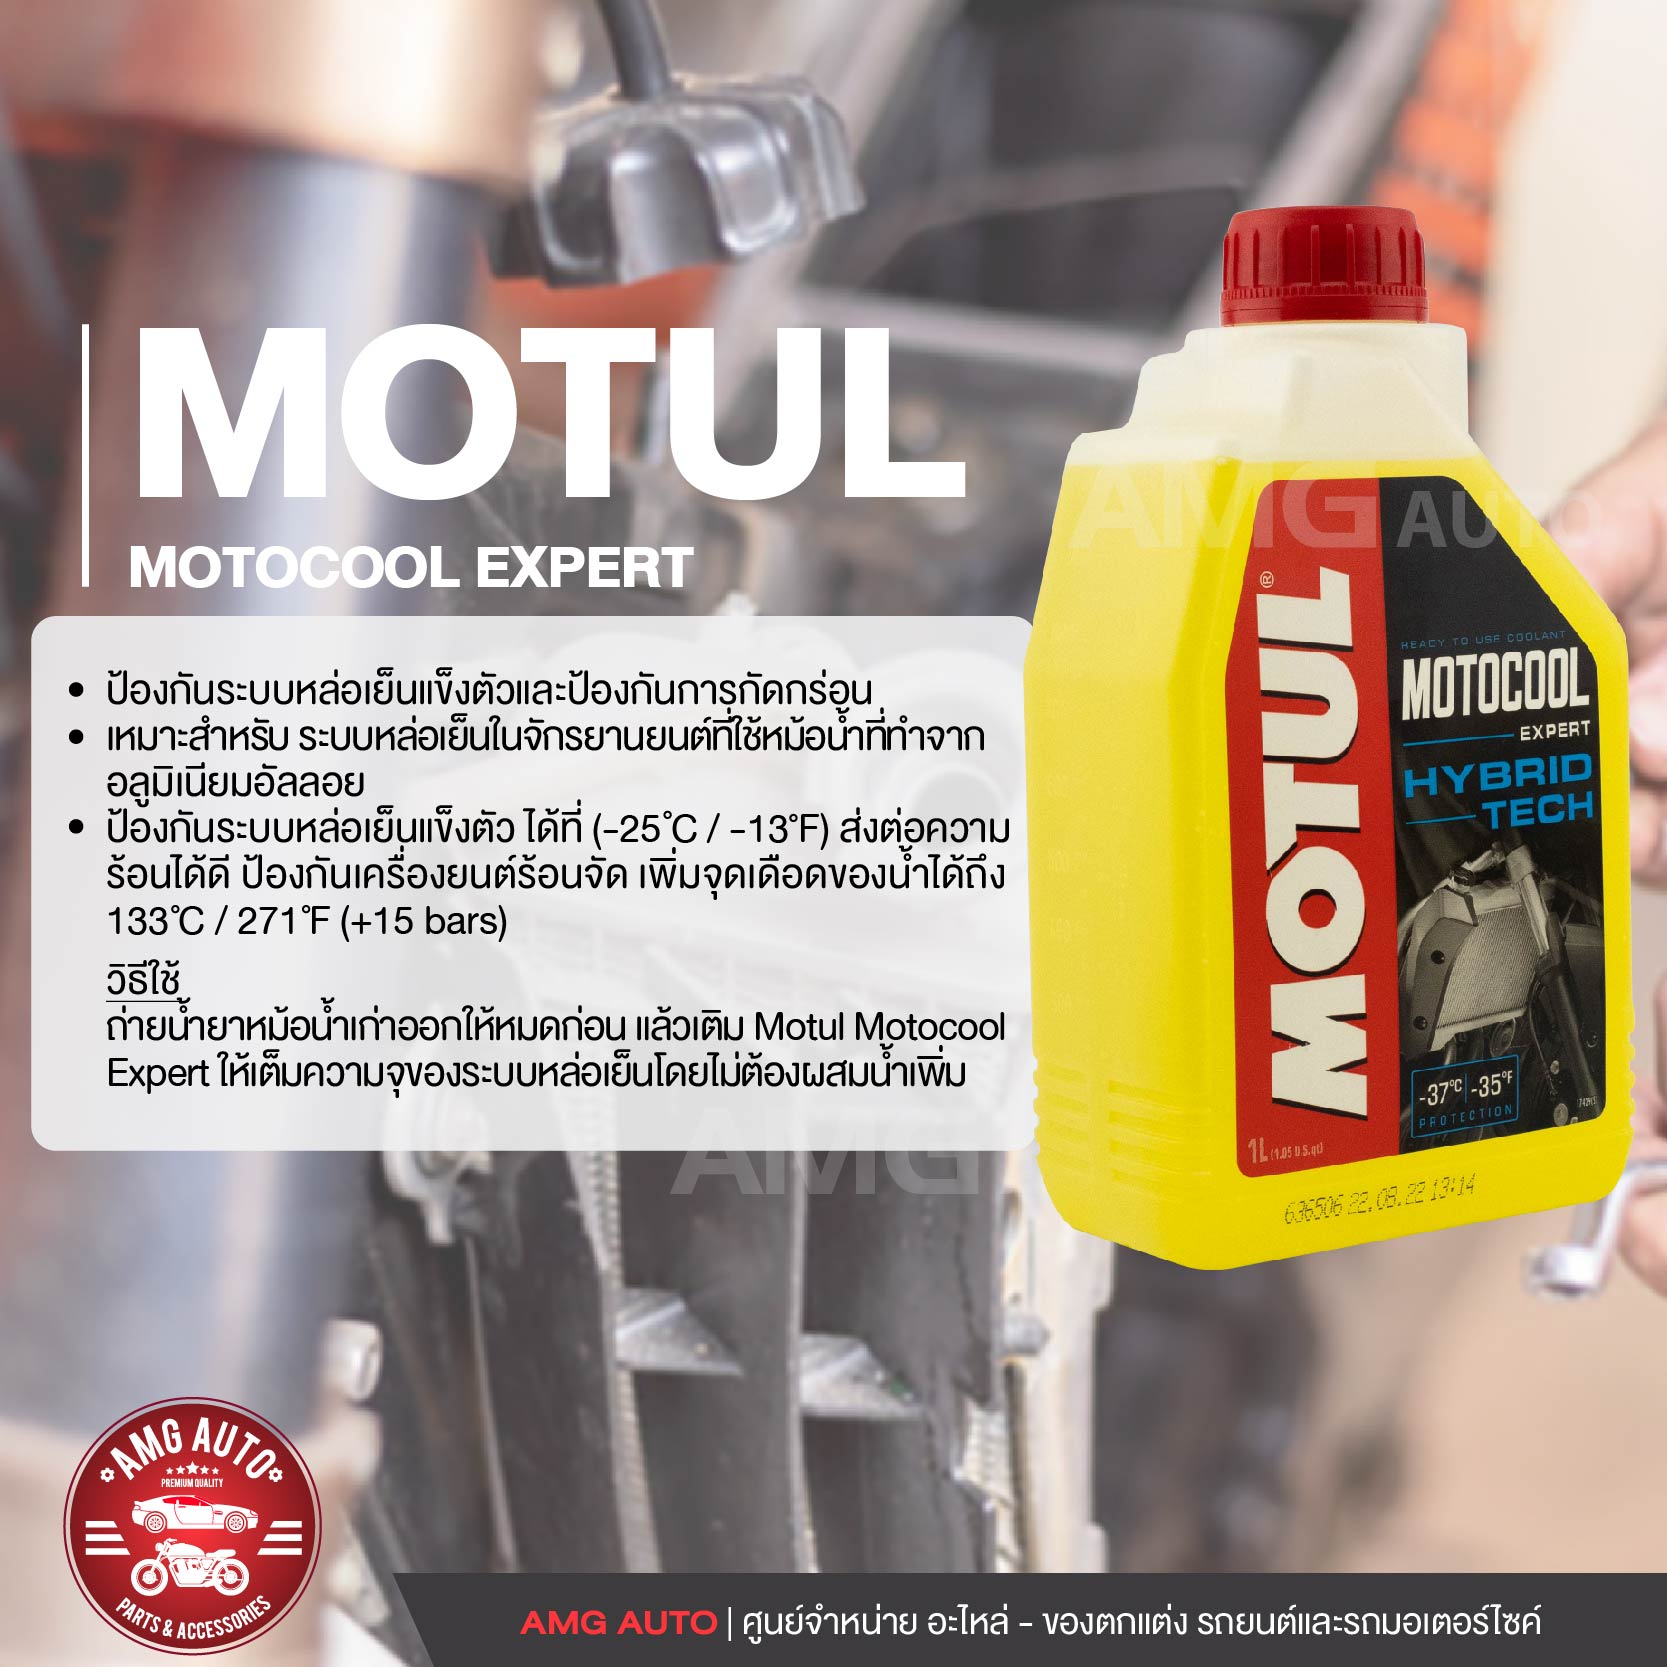 motul-motocool-expert-hybrid-น้ำหล่อเย็น-โมตุล-สูตรพร้อมใช้-ใช้ได้ทั้งรถยนต์และมอเตอร์ไซค์-mo0033